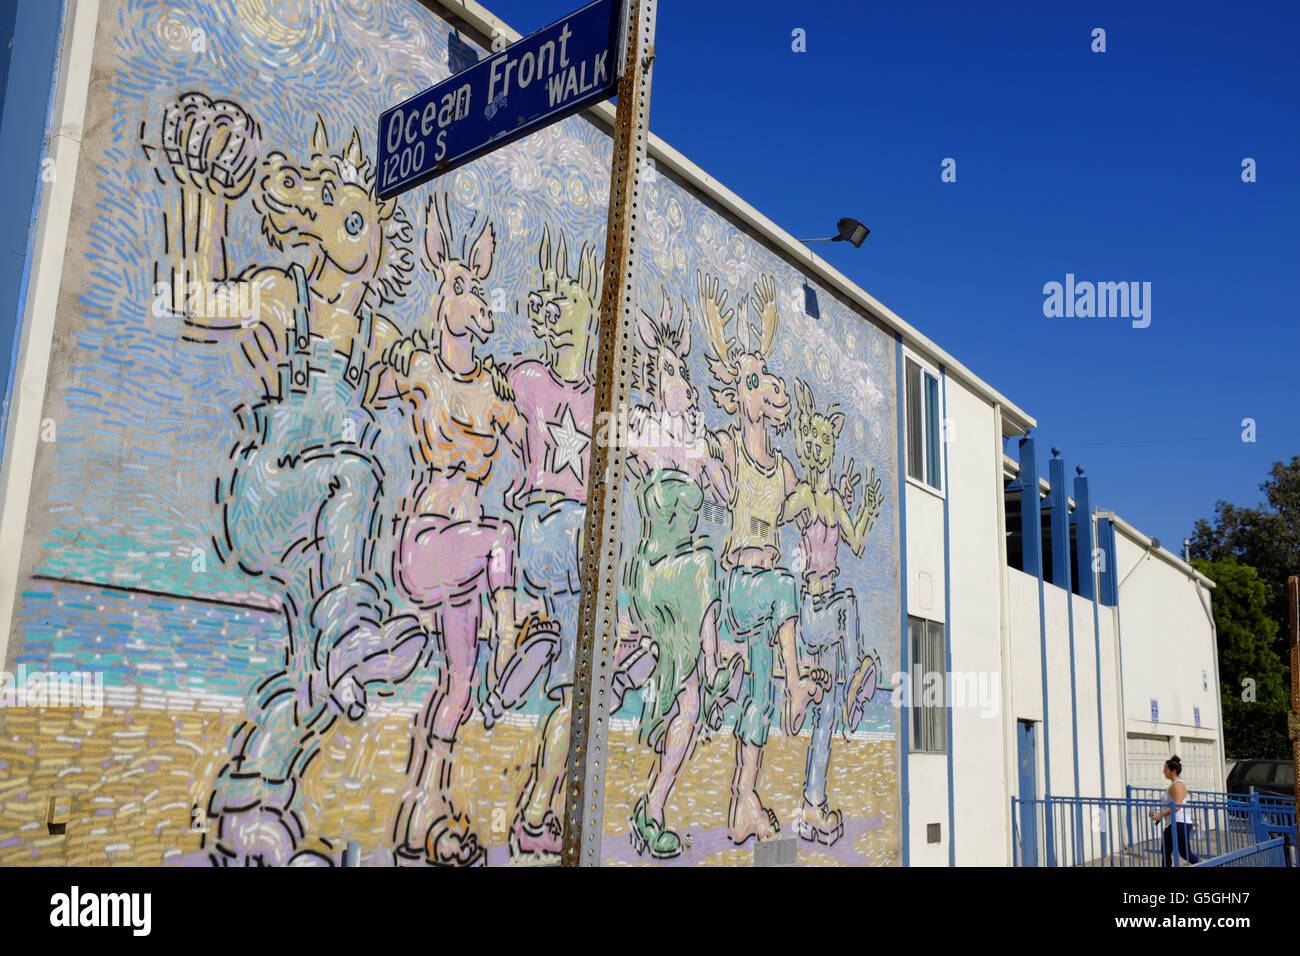 Venice Beach Murals and Graffiti Wall Art, Venice Beach, Los Angeles. Stock Photo